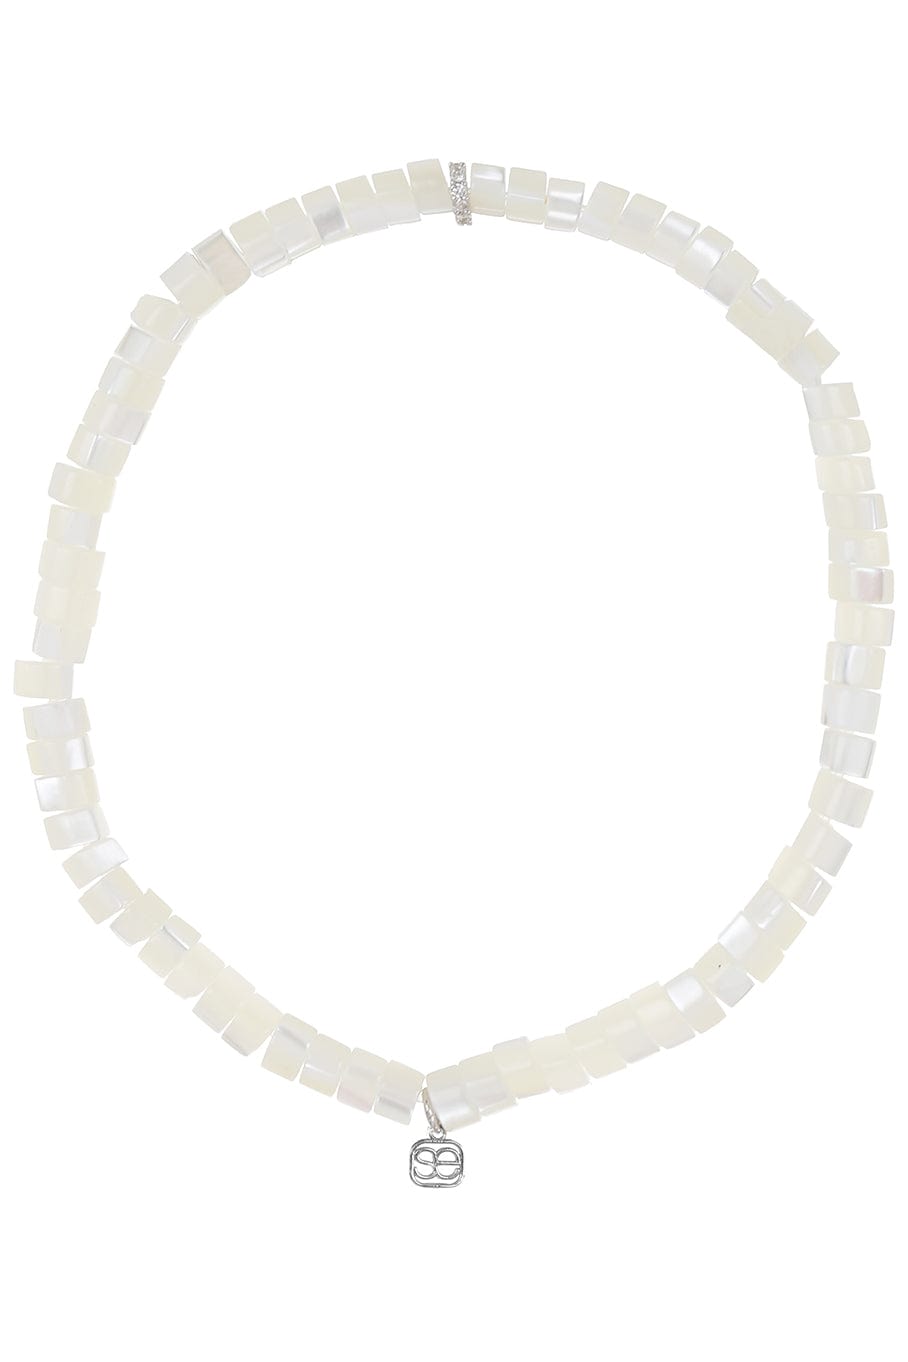 THREE KEYS JEWELRY 4mm White Created-opal/Shell Rings